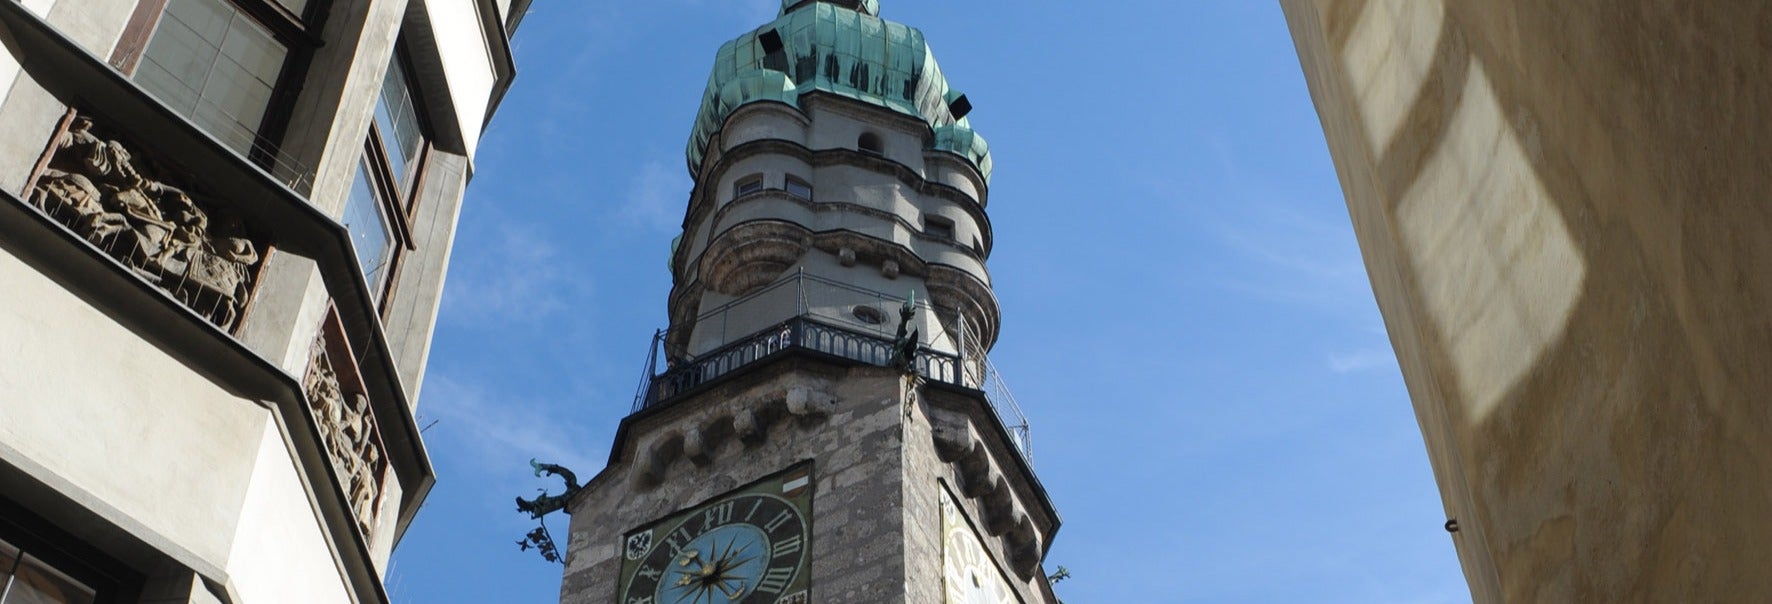 Innsbruck City Tower Entrance